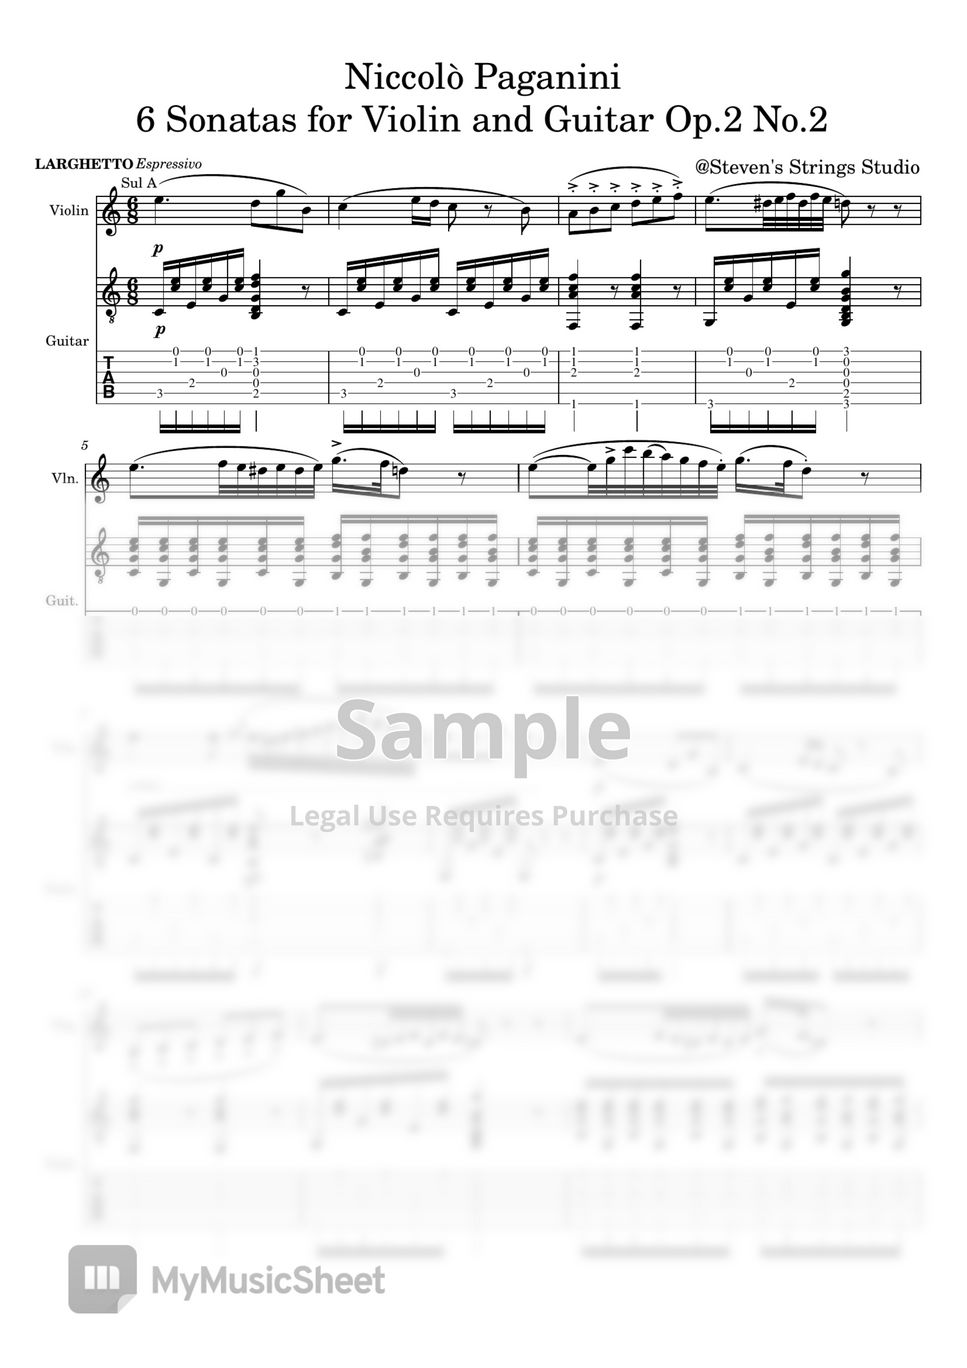 Niccolò Paganini - Paganini 6 Sonatas for Violin and Guitar Op.2 No.2 (Violin Guitar Duet) by Steven's Strings Studio